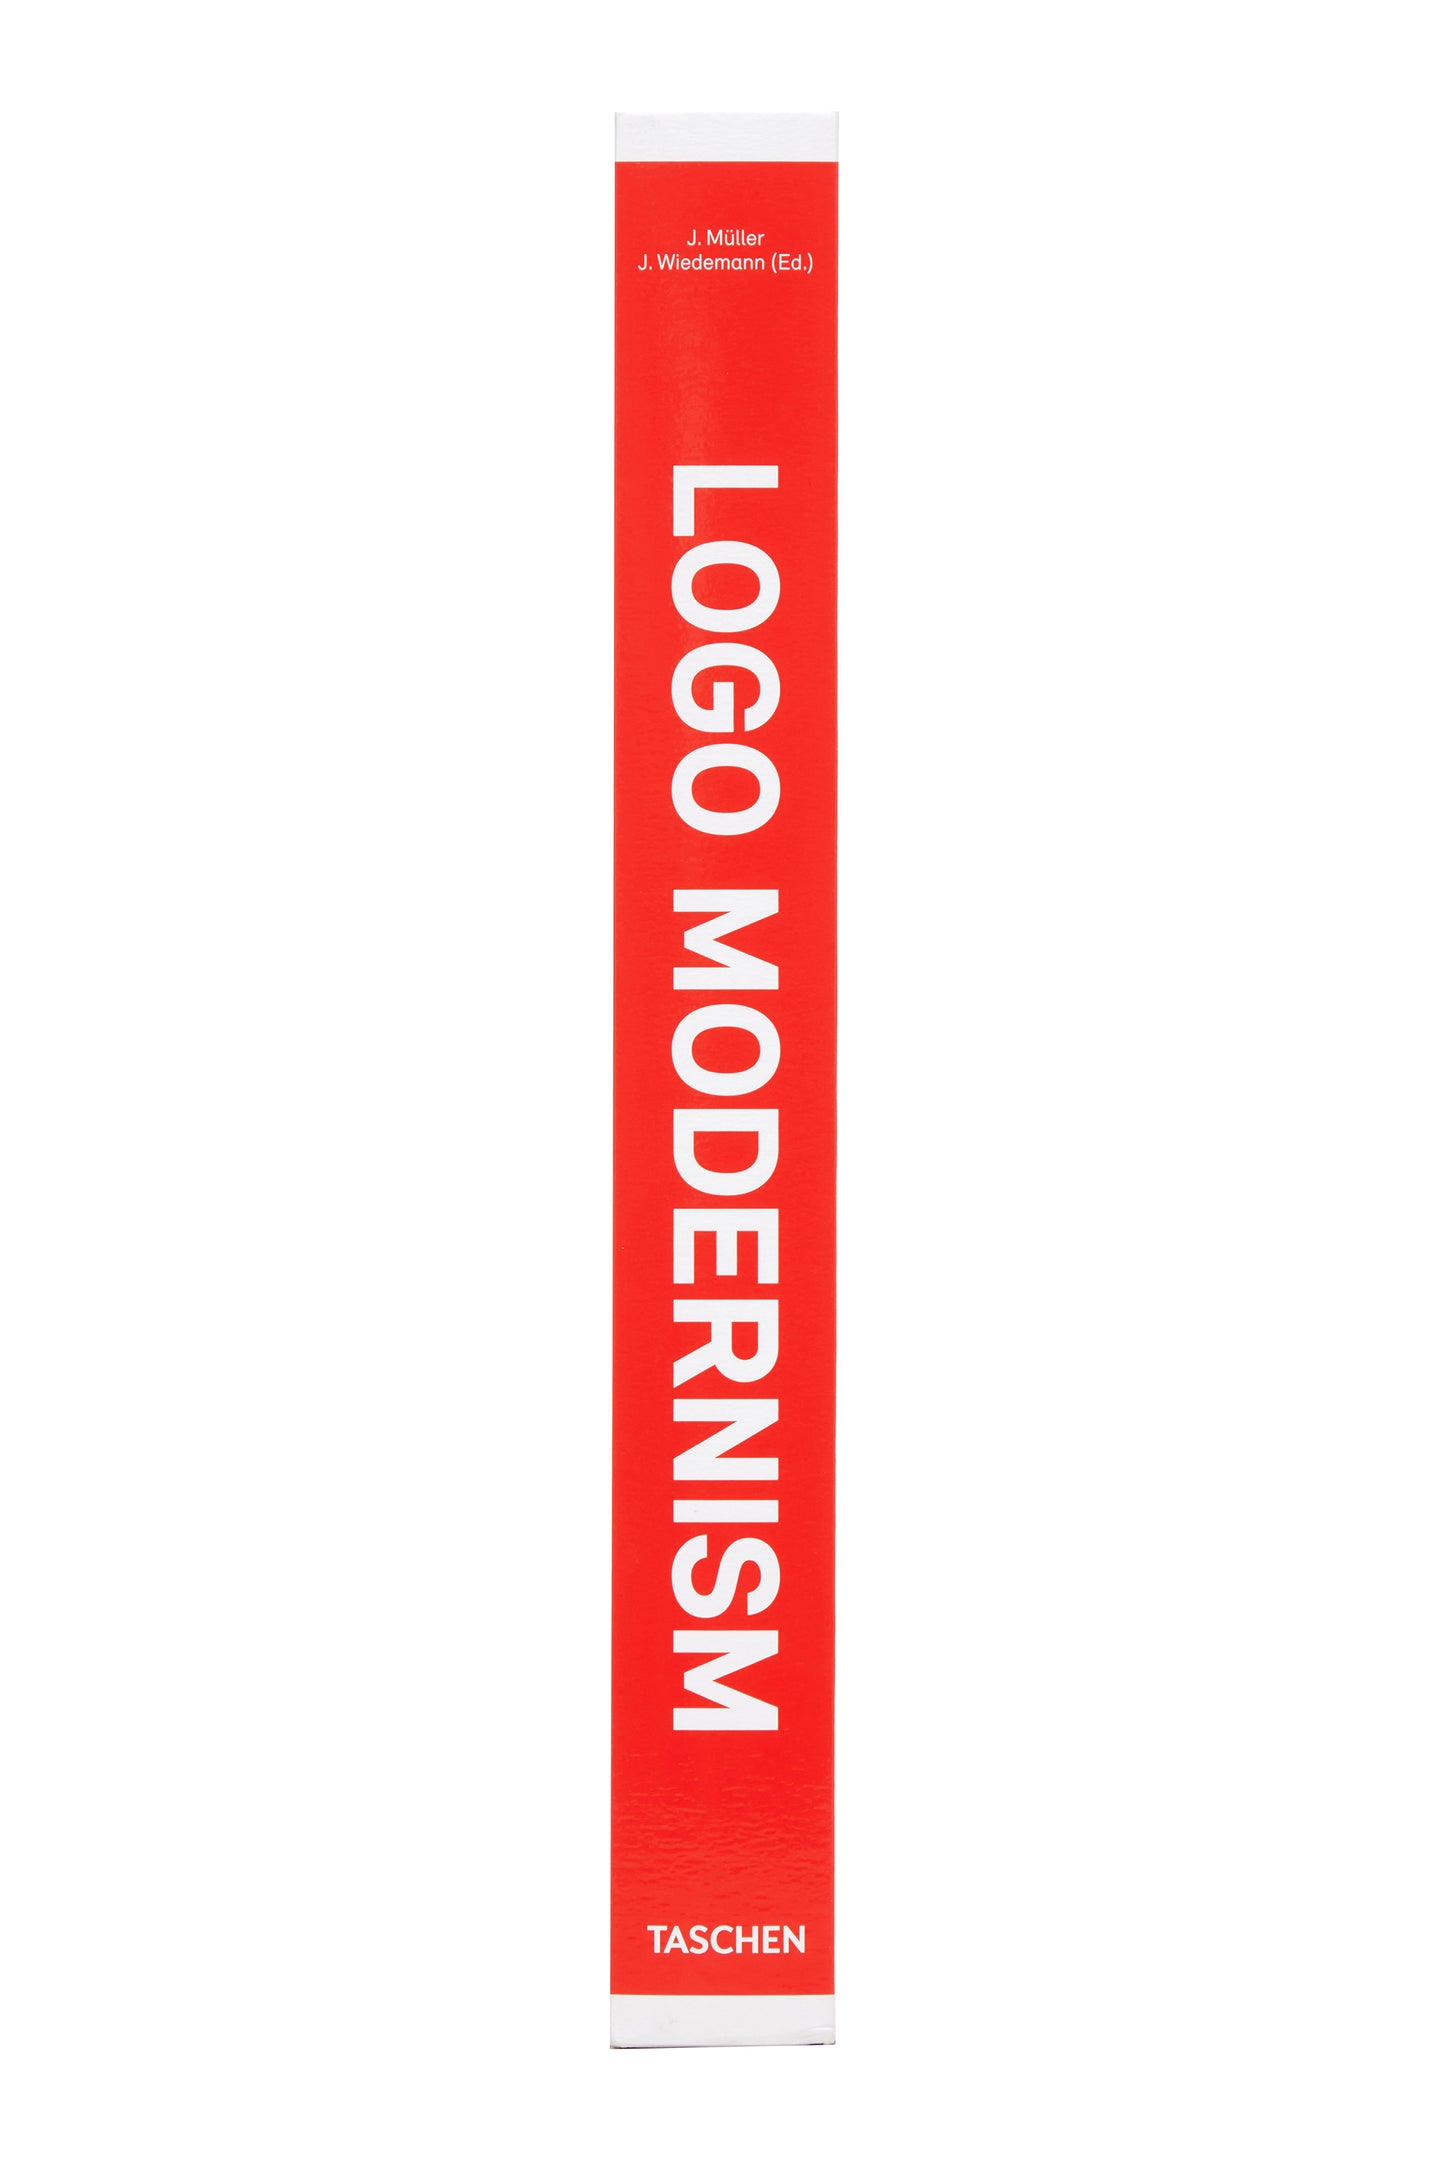 LOGO Modernism